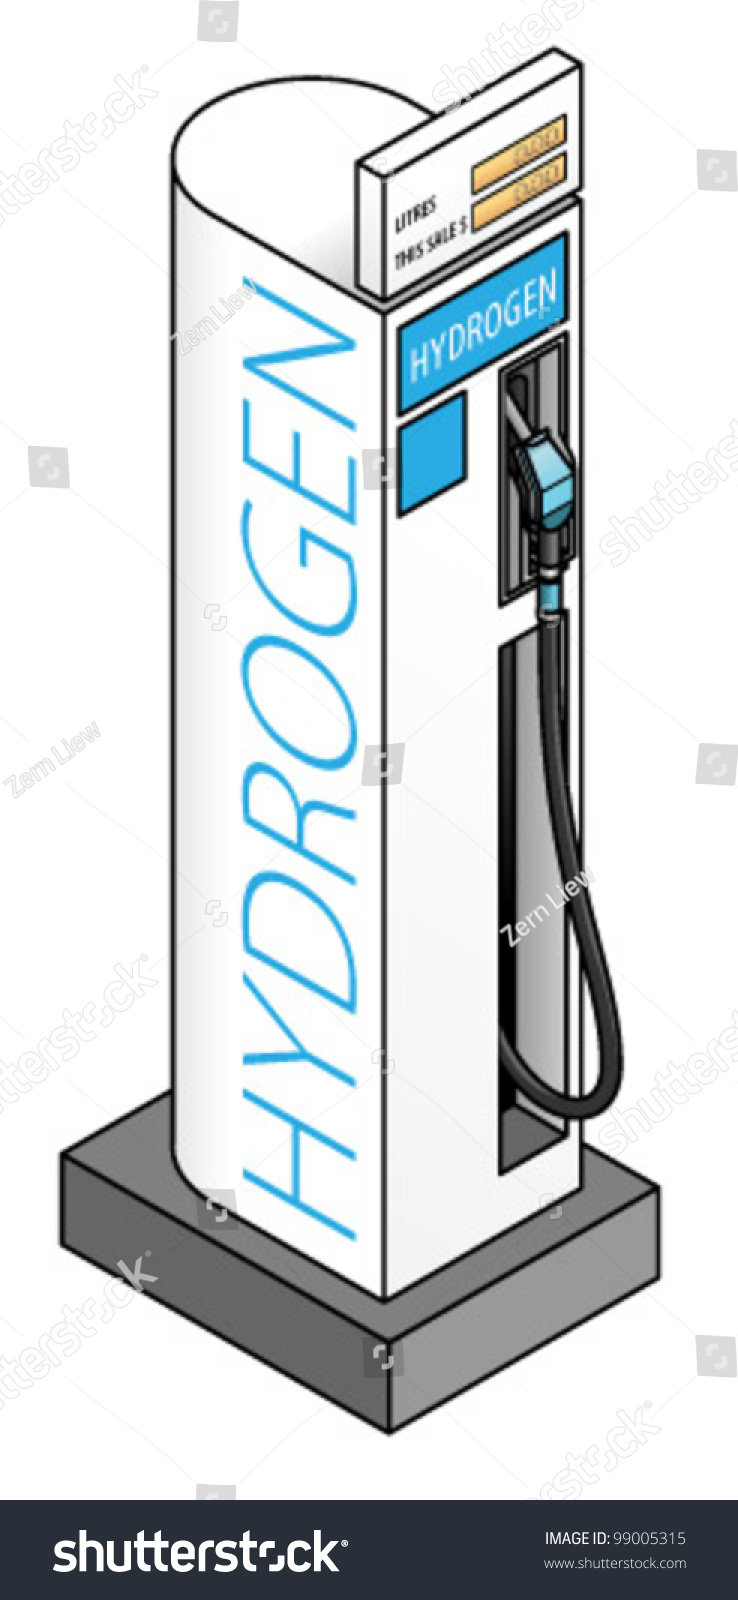 SVG of A hydrogen fuel pump/bowser. svg